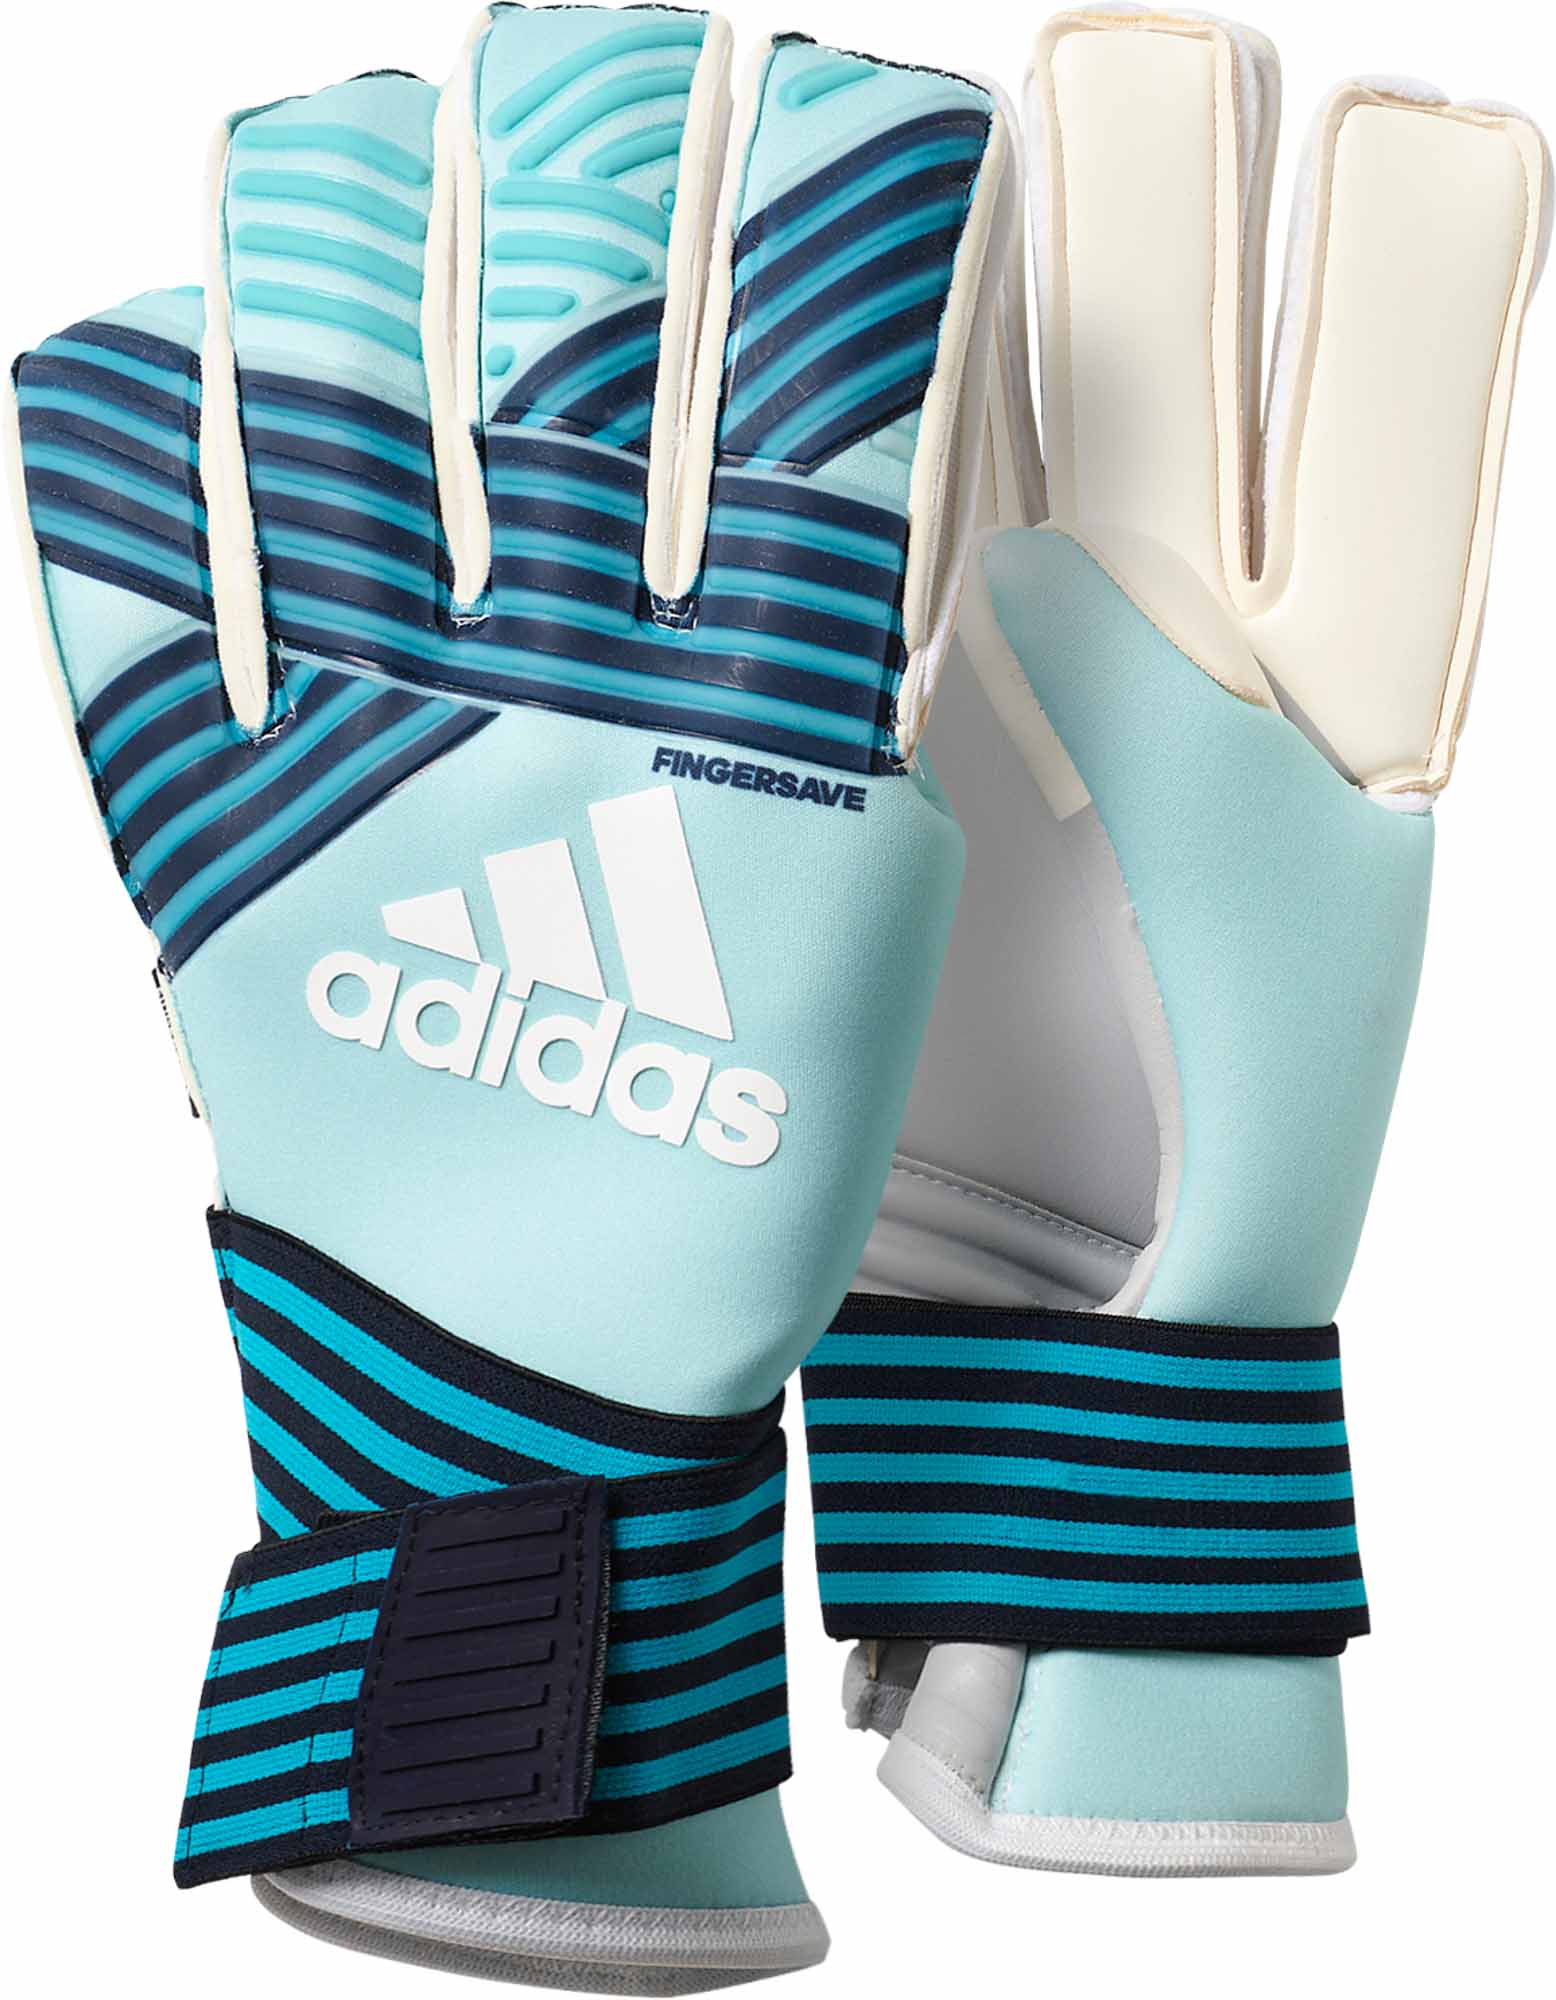 adidas fs goalkeeper gloves